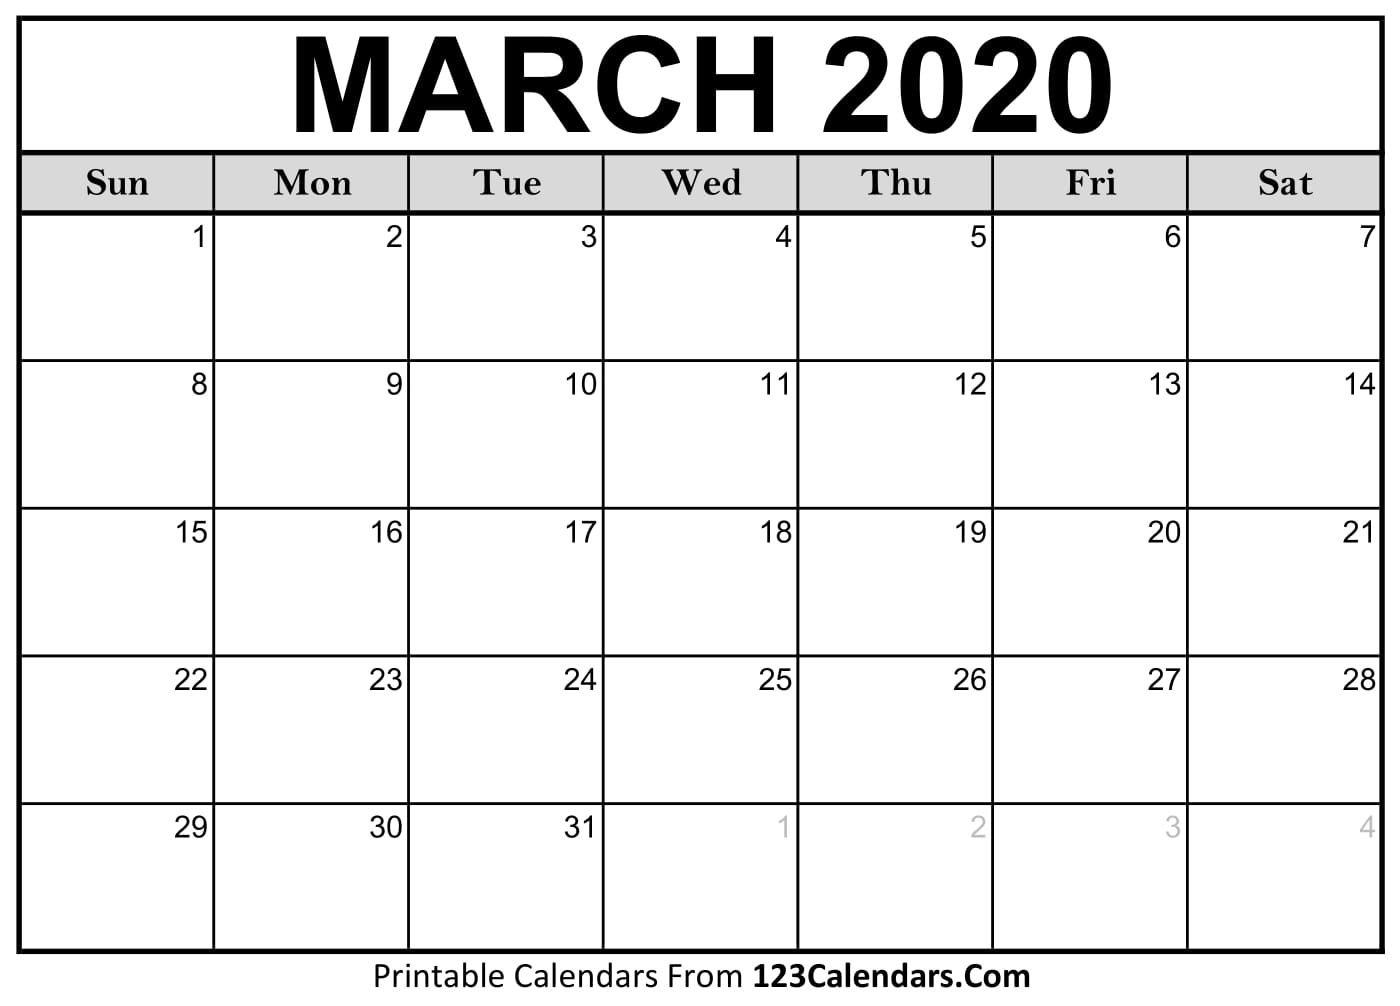 March 2020 Printable Calendar 123Calendars